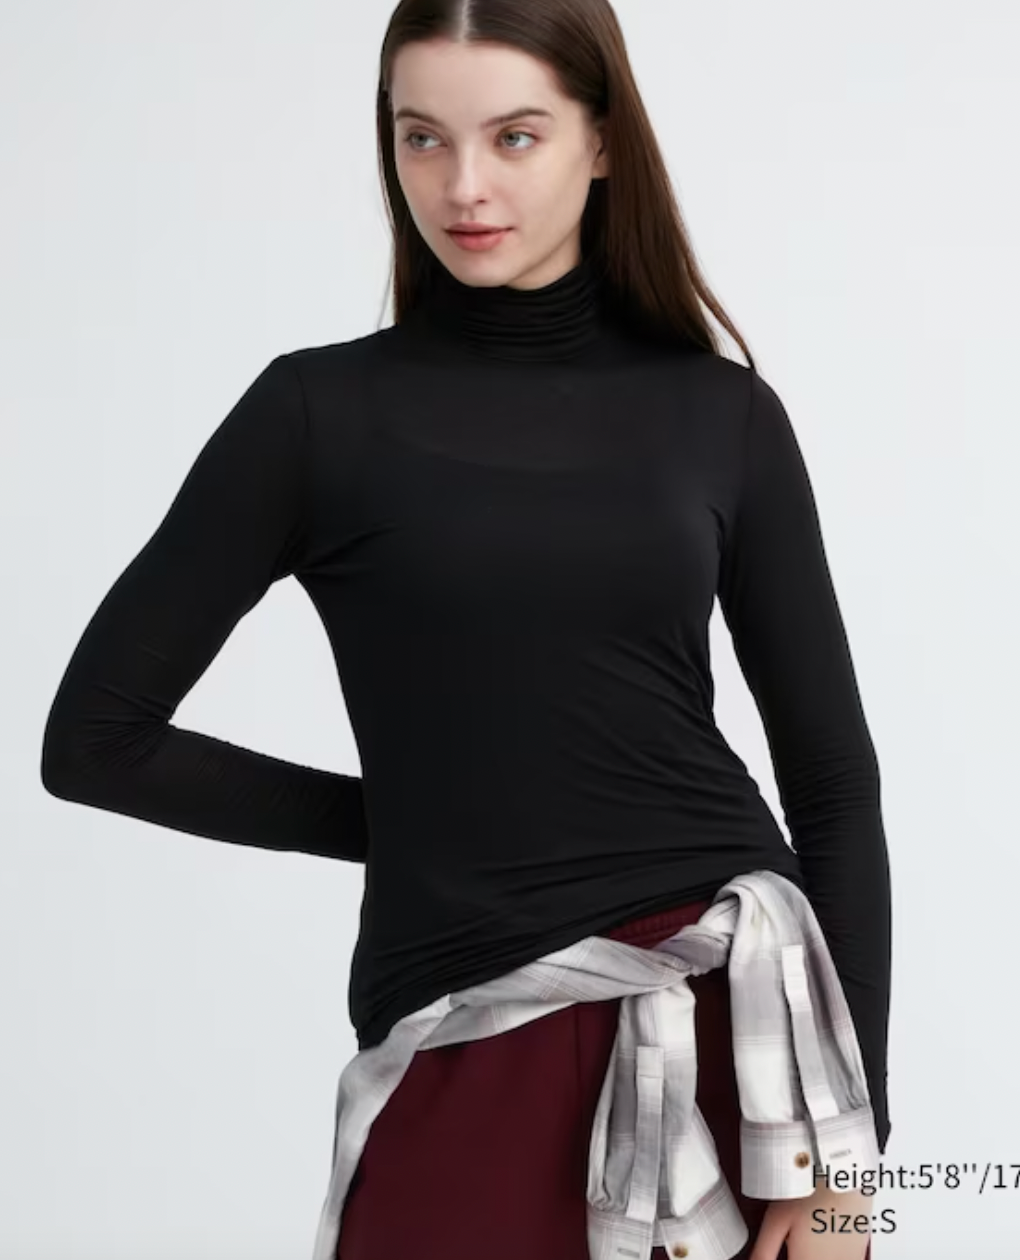 Fashion High Quality Body Hug Long Sleeve Turtleneck Tops- 3pcs